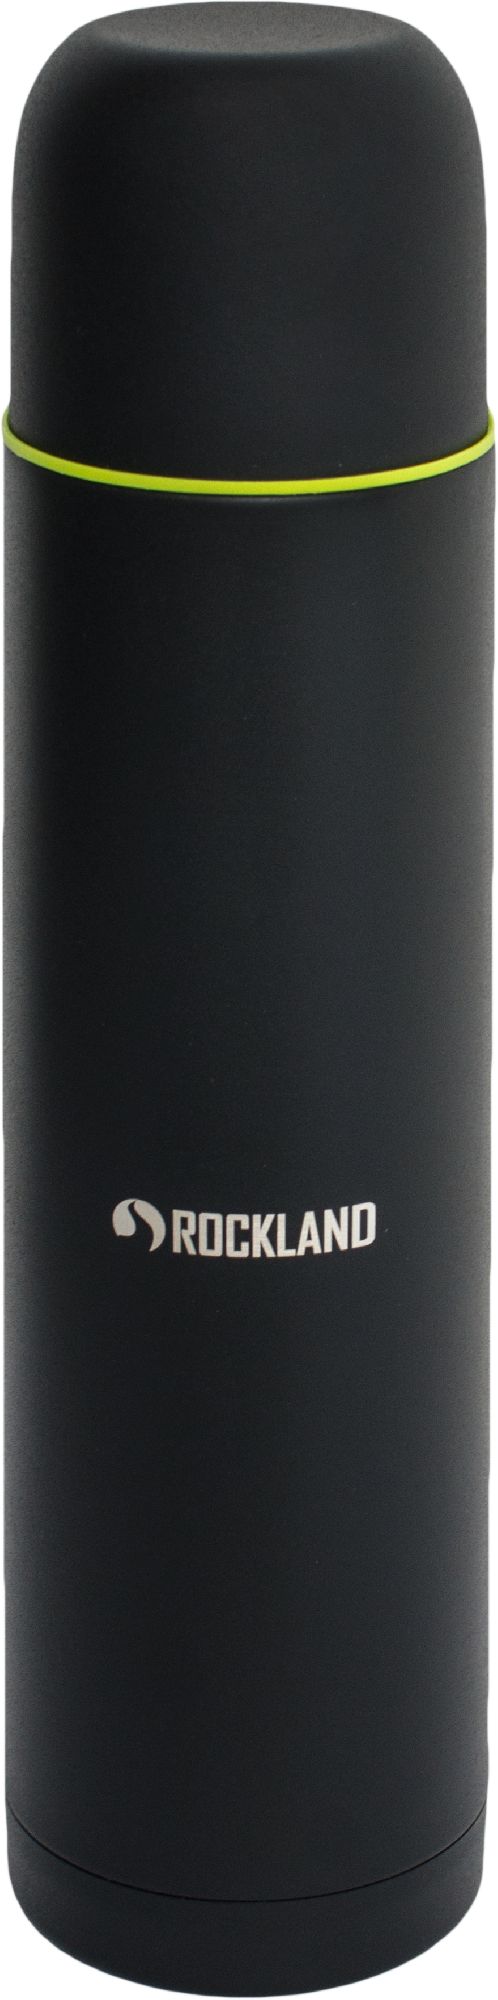 Rockland Astro steel vacuum thermos 0.7L termoss